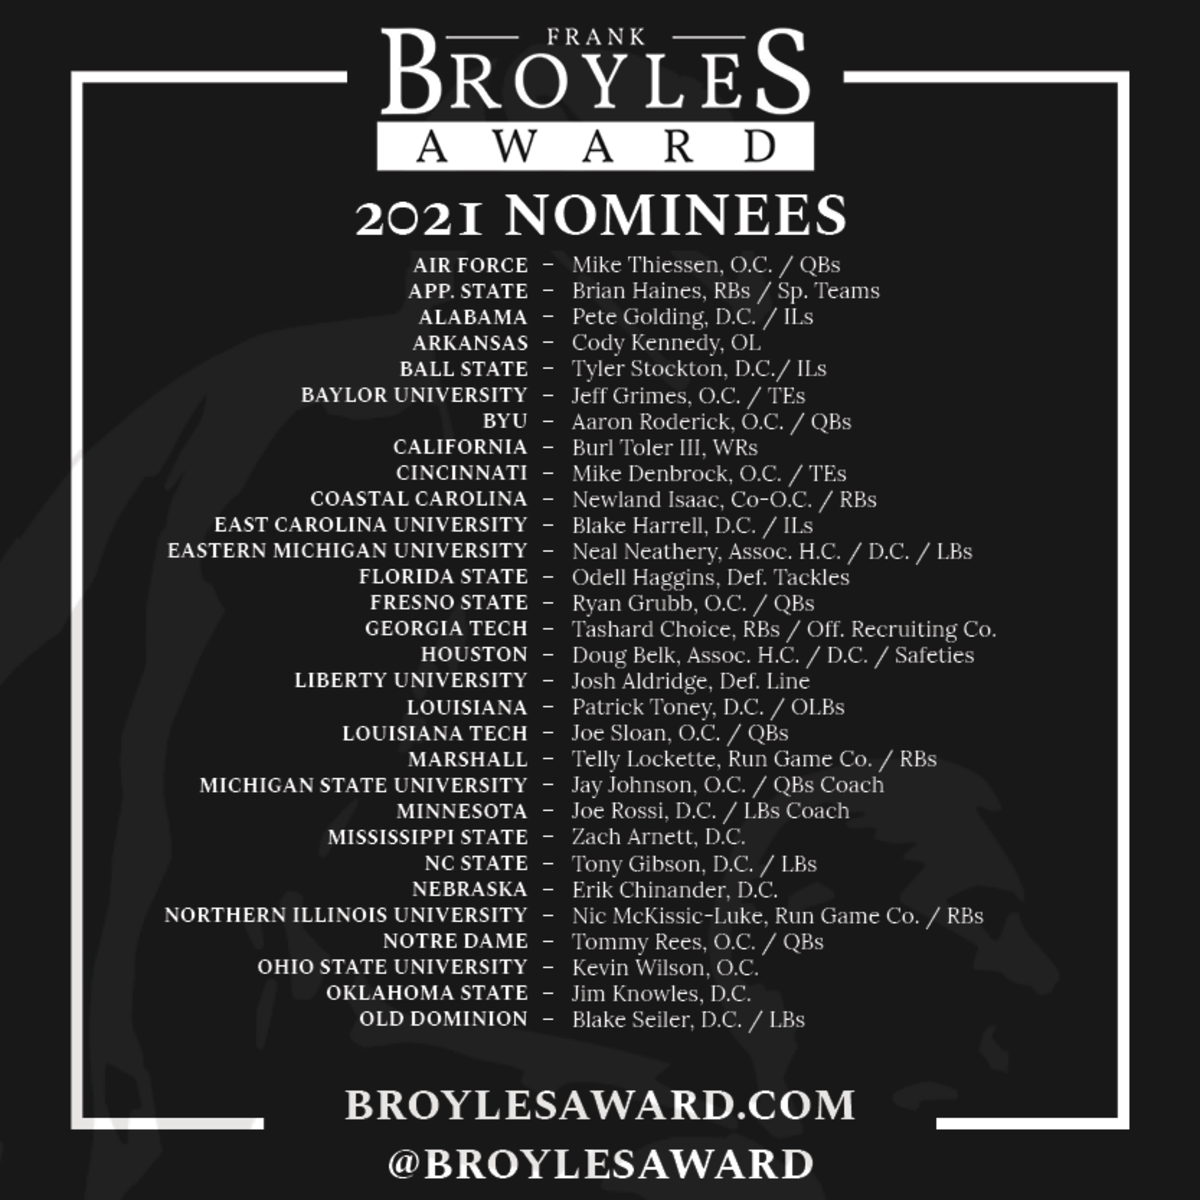 2021 Broyles Nominees